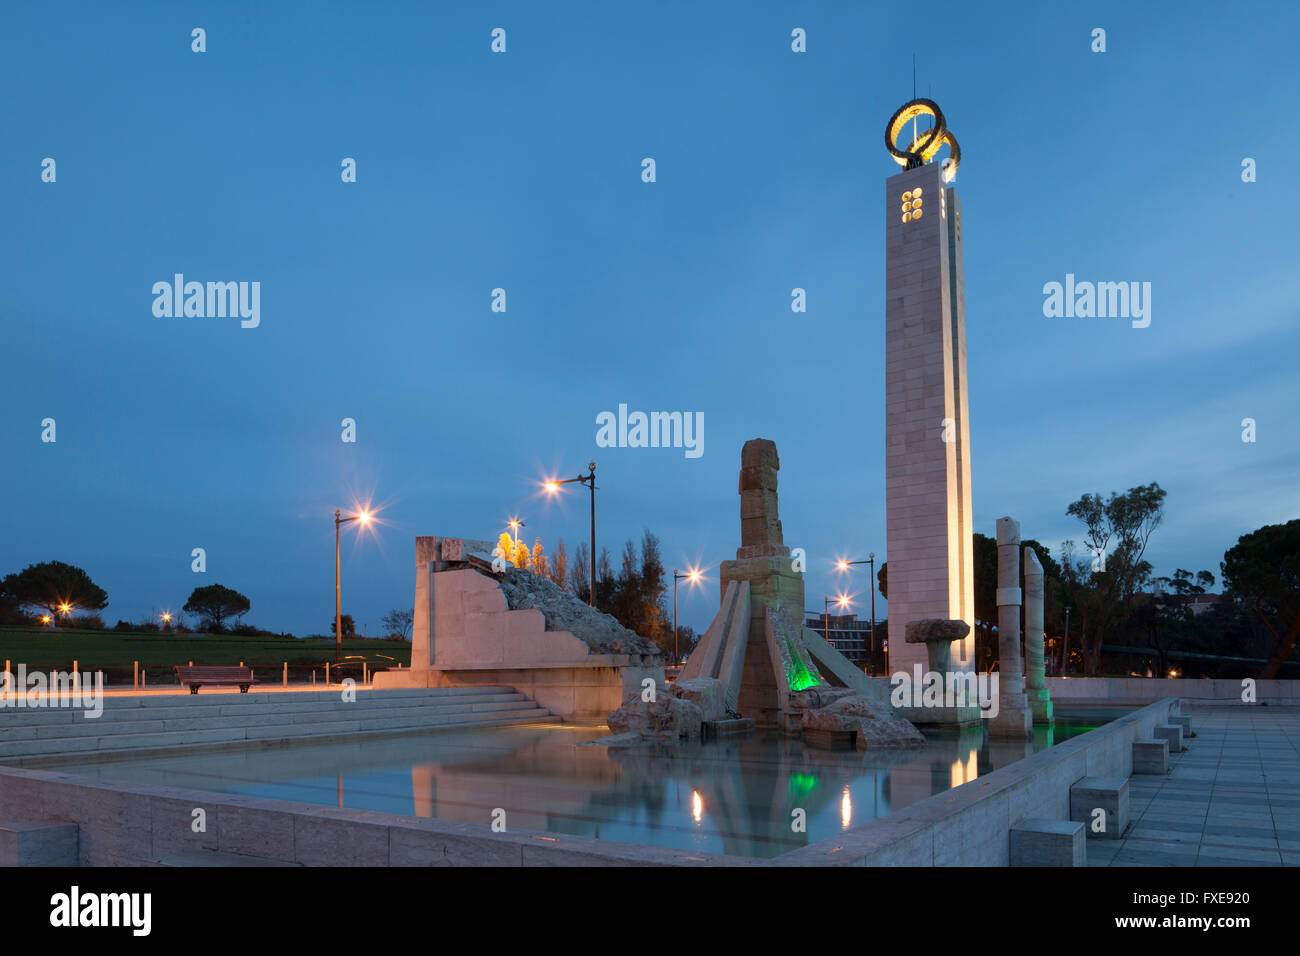 Monument to 25th April Revolution in Eduardo VII Park, Lisbon, Portugal. Stock Photo